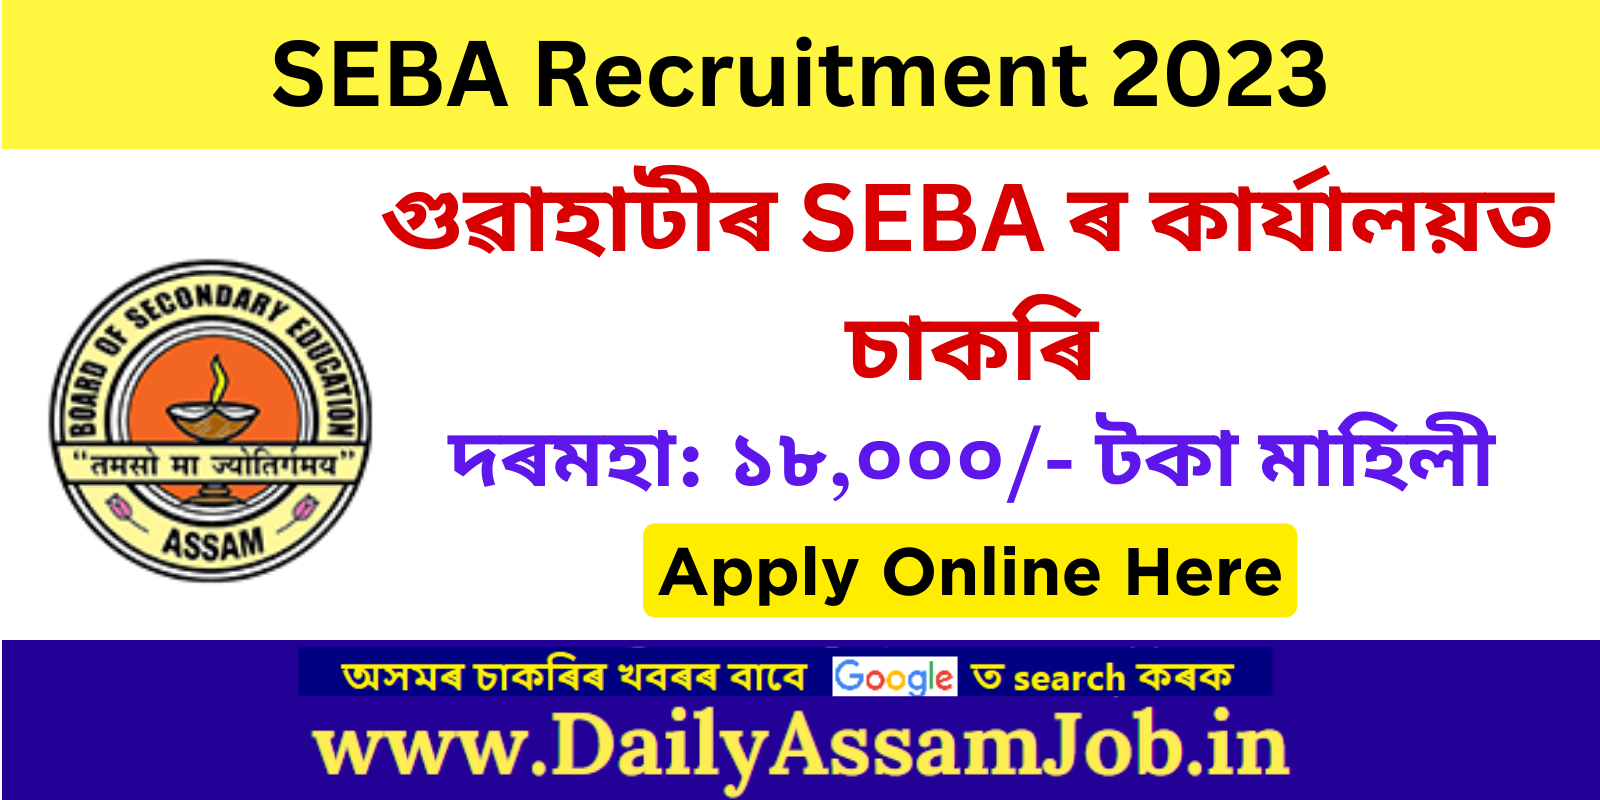 Assam Career :: SEBA Recruitment 2023 for 04 Junior Administrative Assistant Vacancy